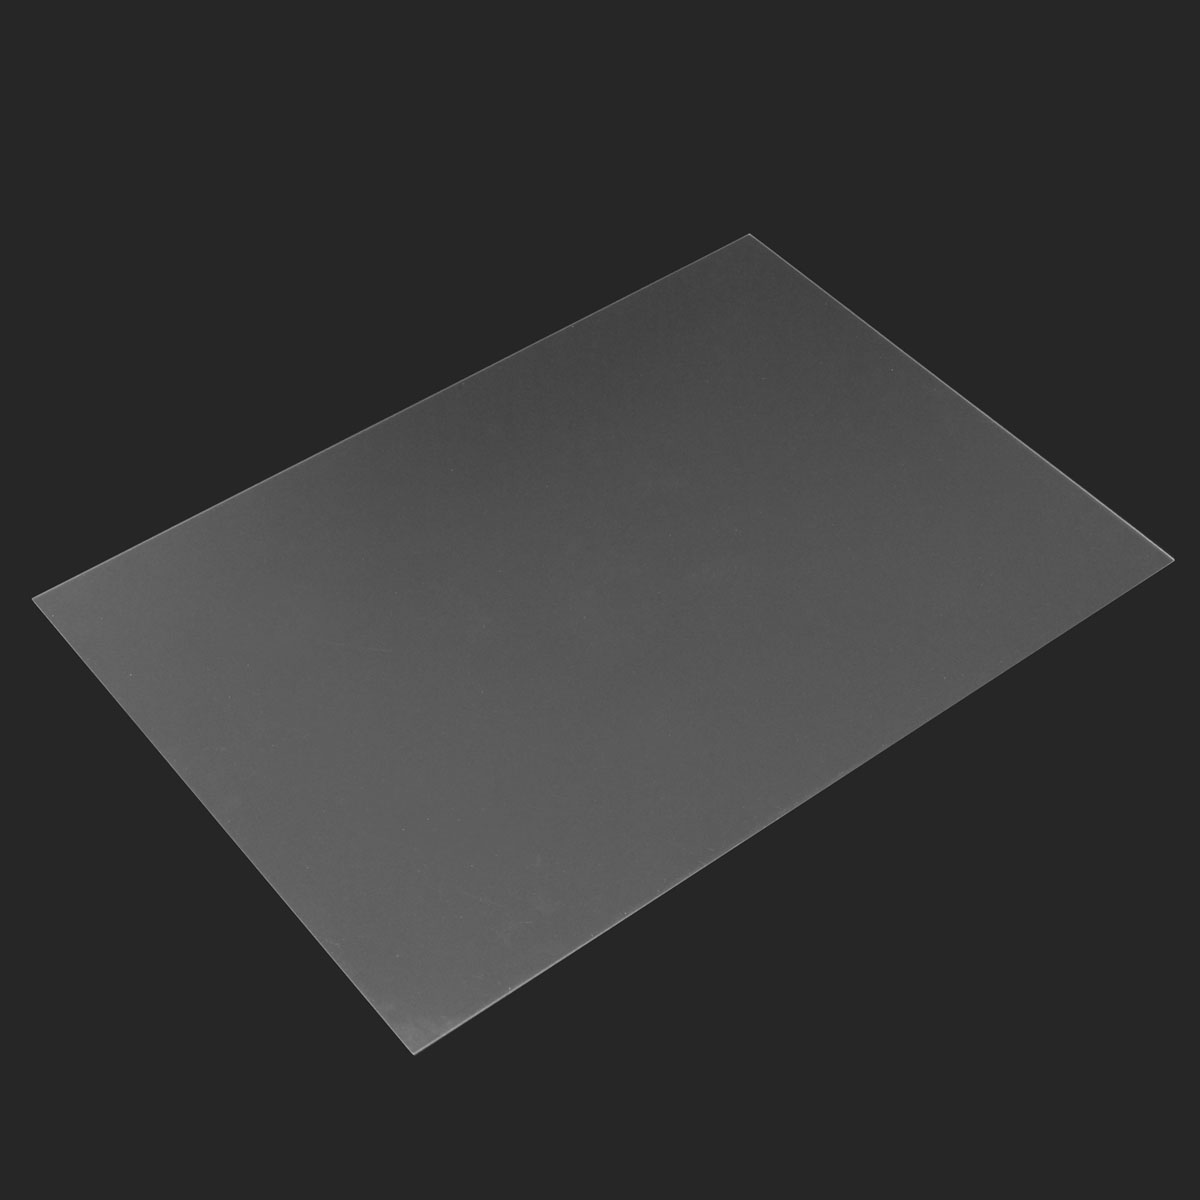 2-8mm-Thickness-420x594mm-Acrylic-Sheet-Plastic-Panel-1200785-2